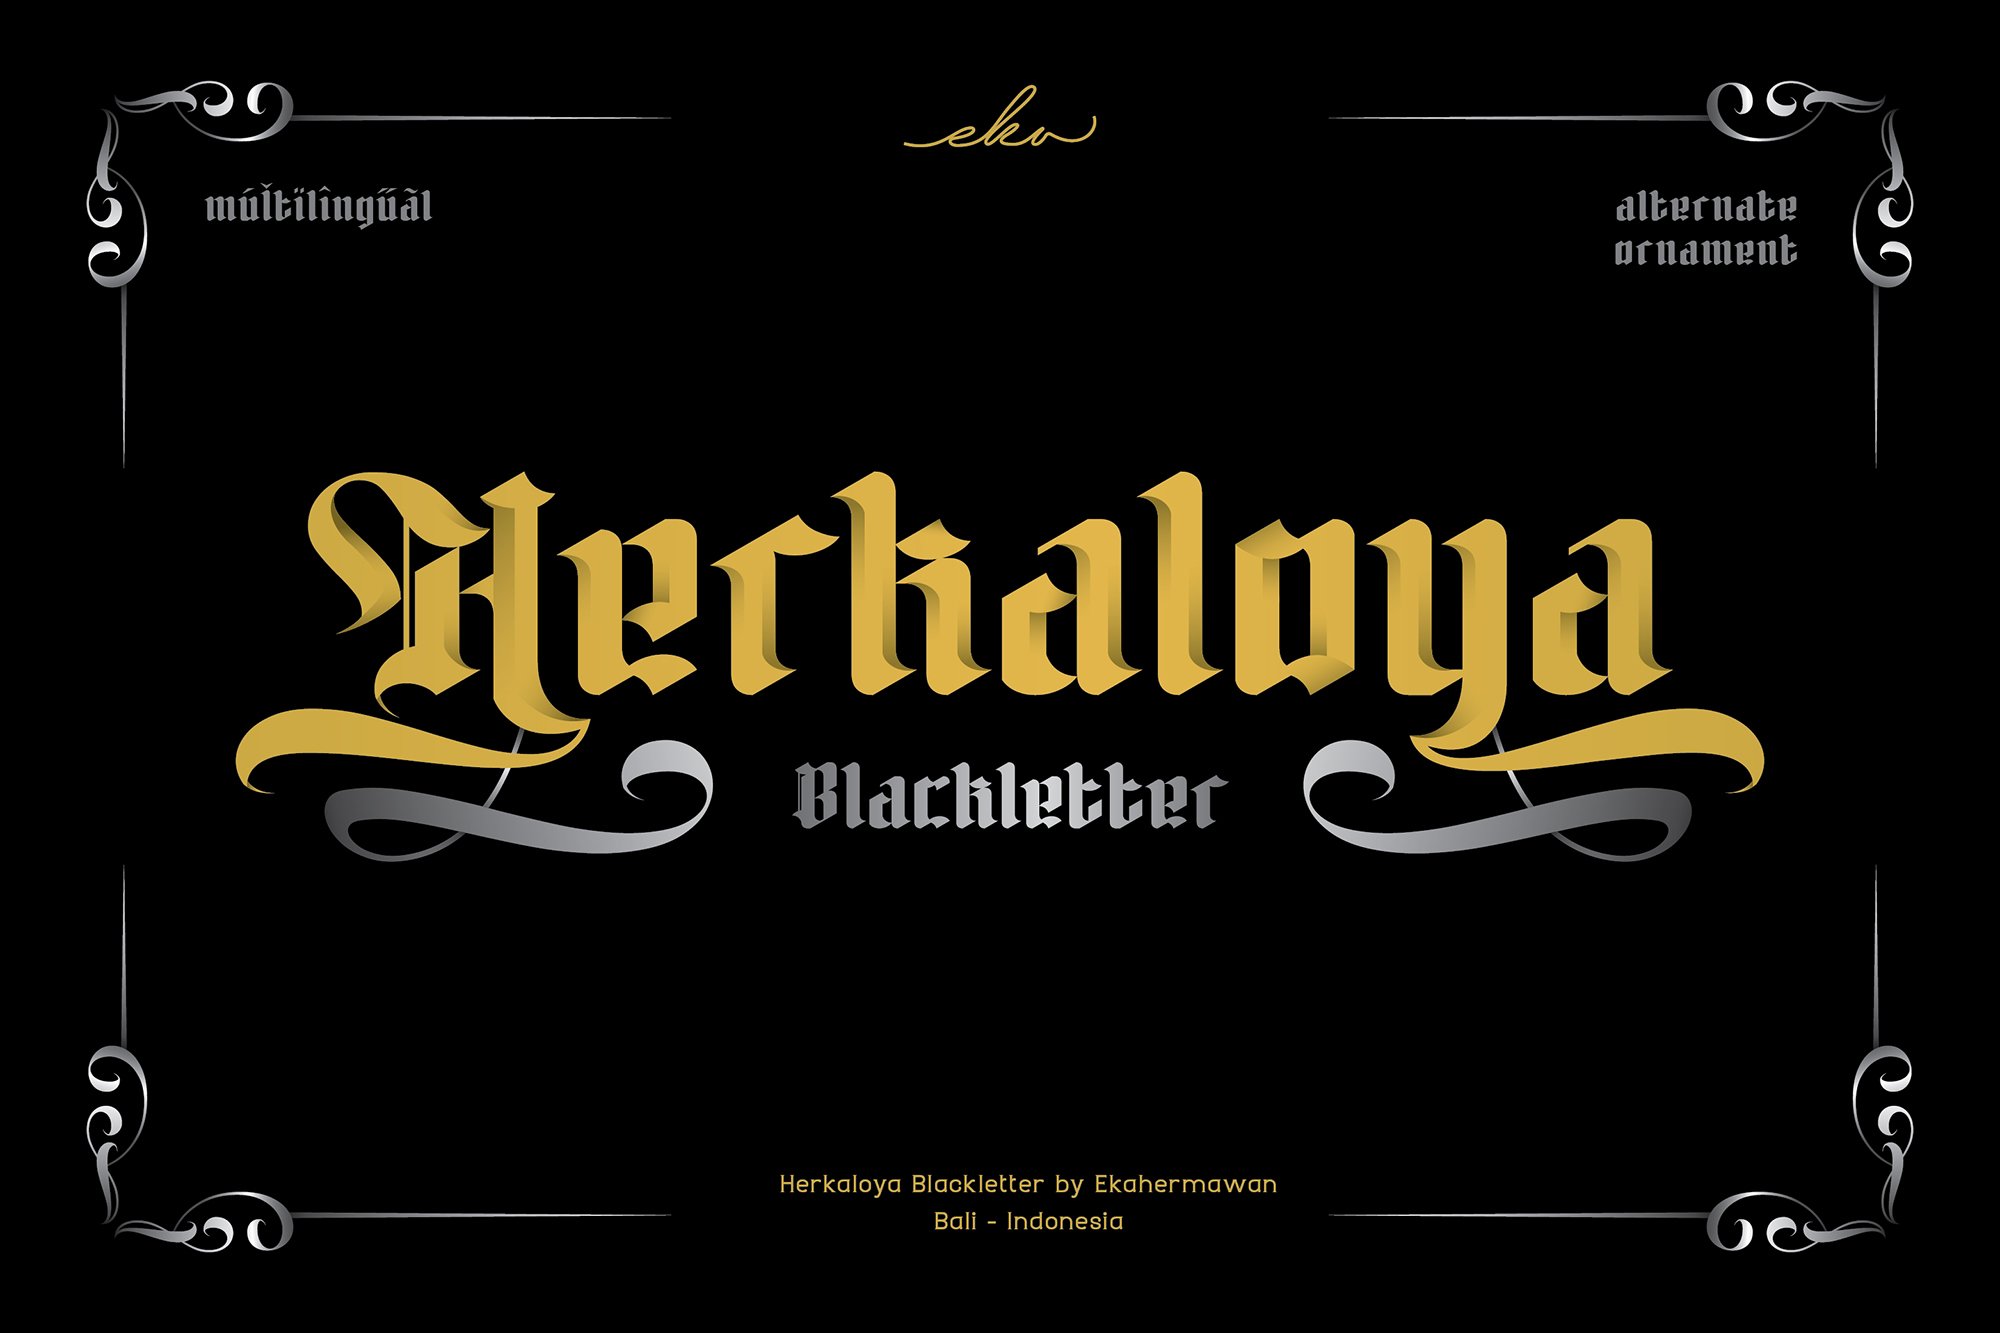 Herkaloya - Ornament Blackletter cover image.